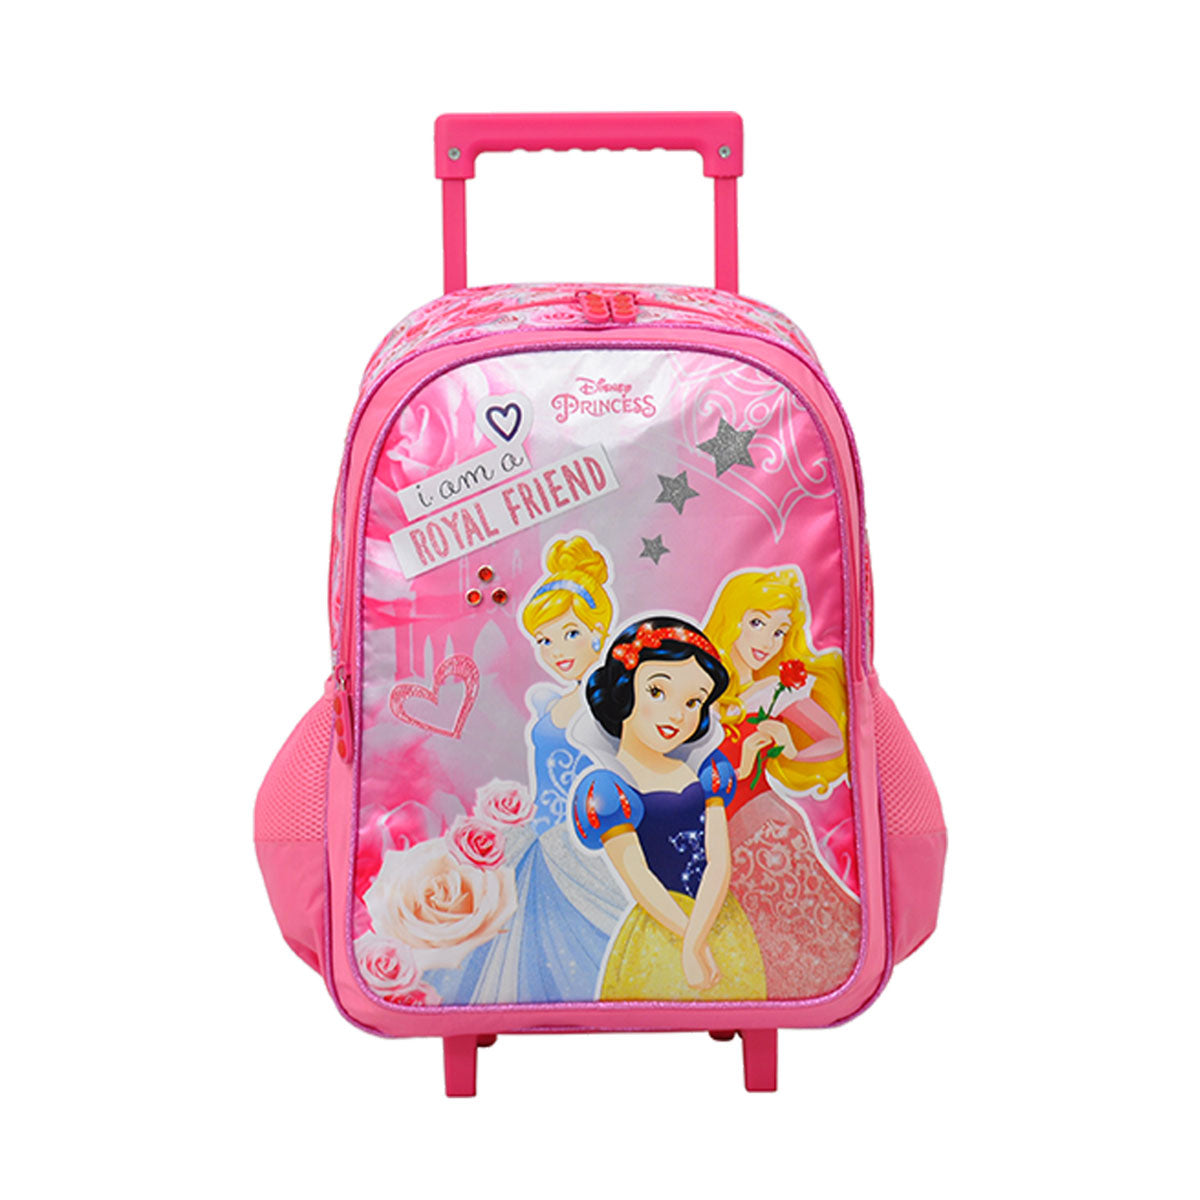 Disney Princess - Royal Friend Trolley Bag